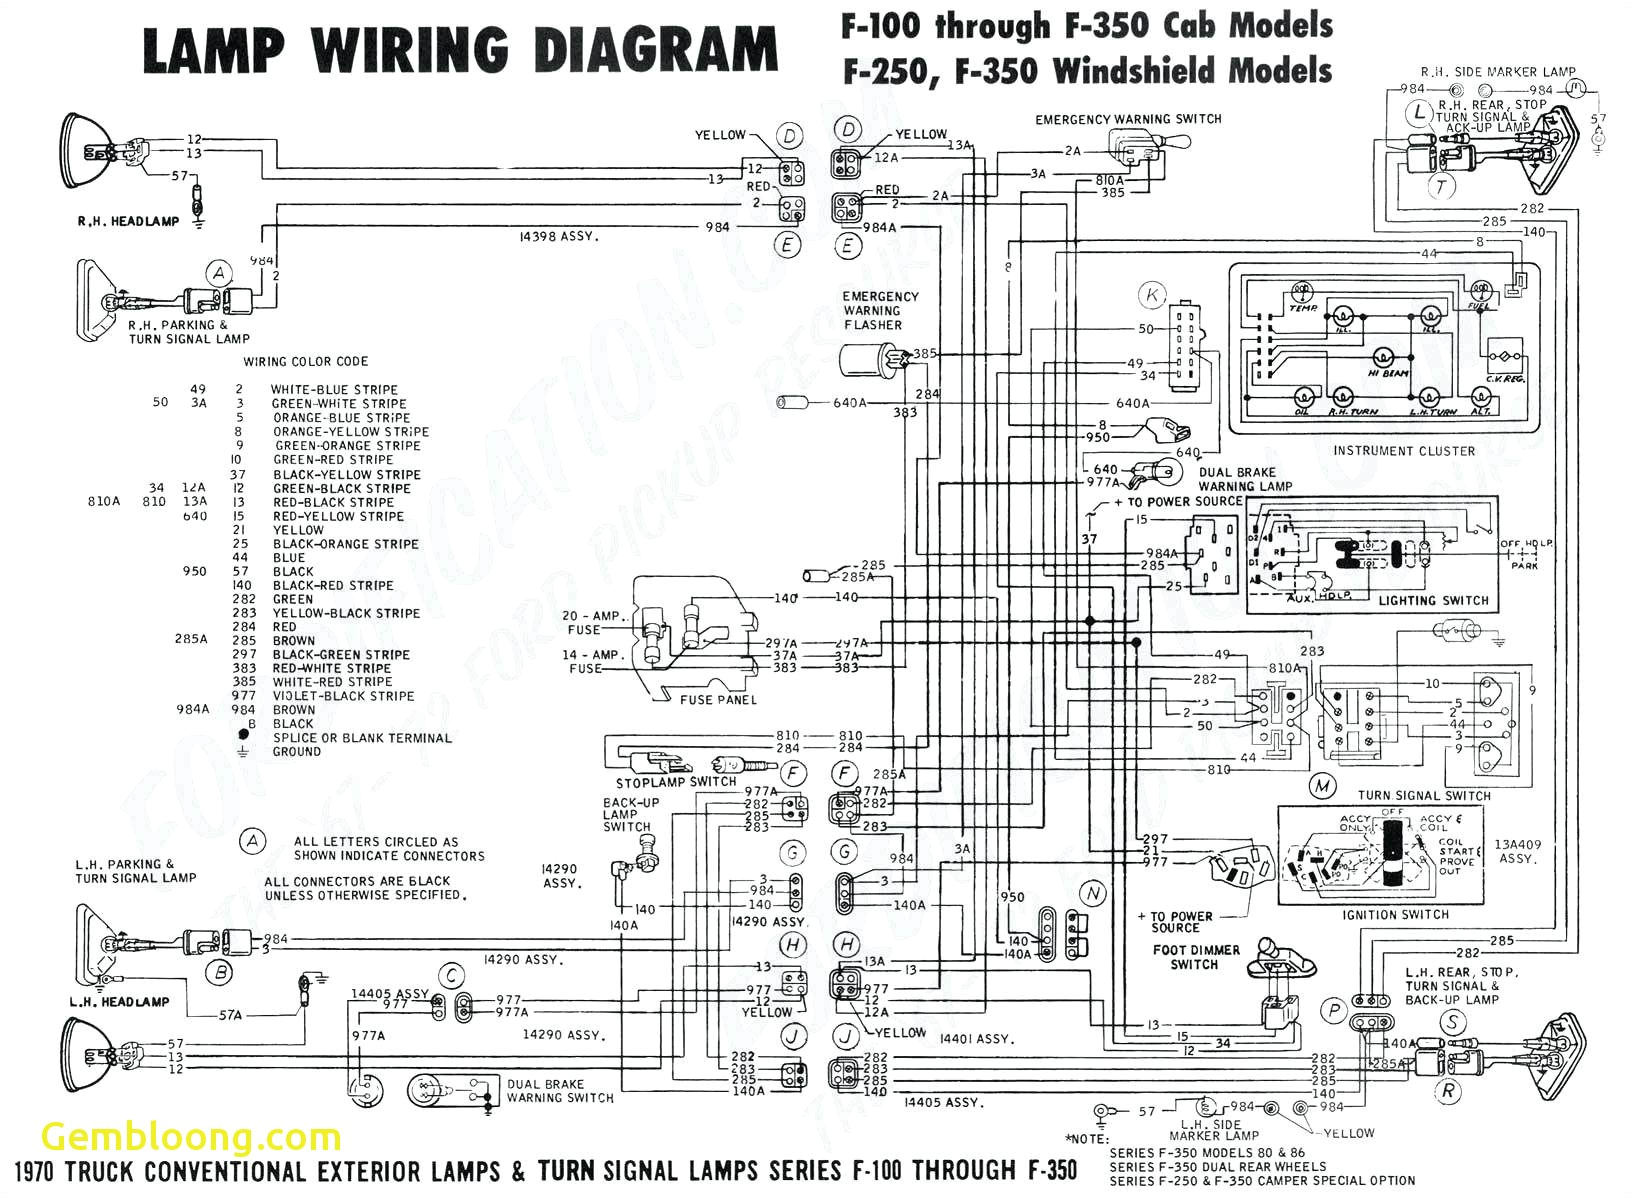 jeep wrangler radio wiring diagram pin 2 note 3 wiring diagram part jeep wrangler radio wiring diagram pin 2 note 3